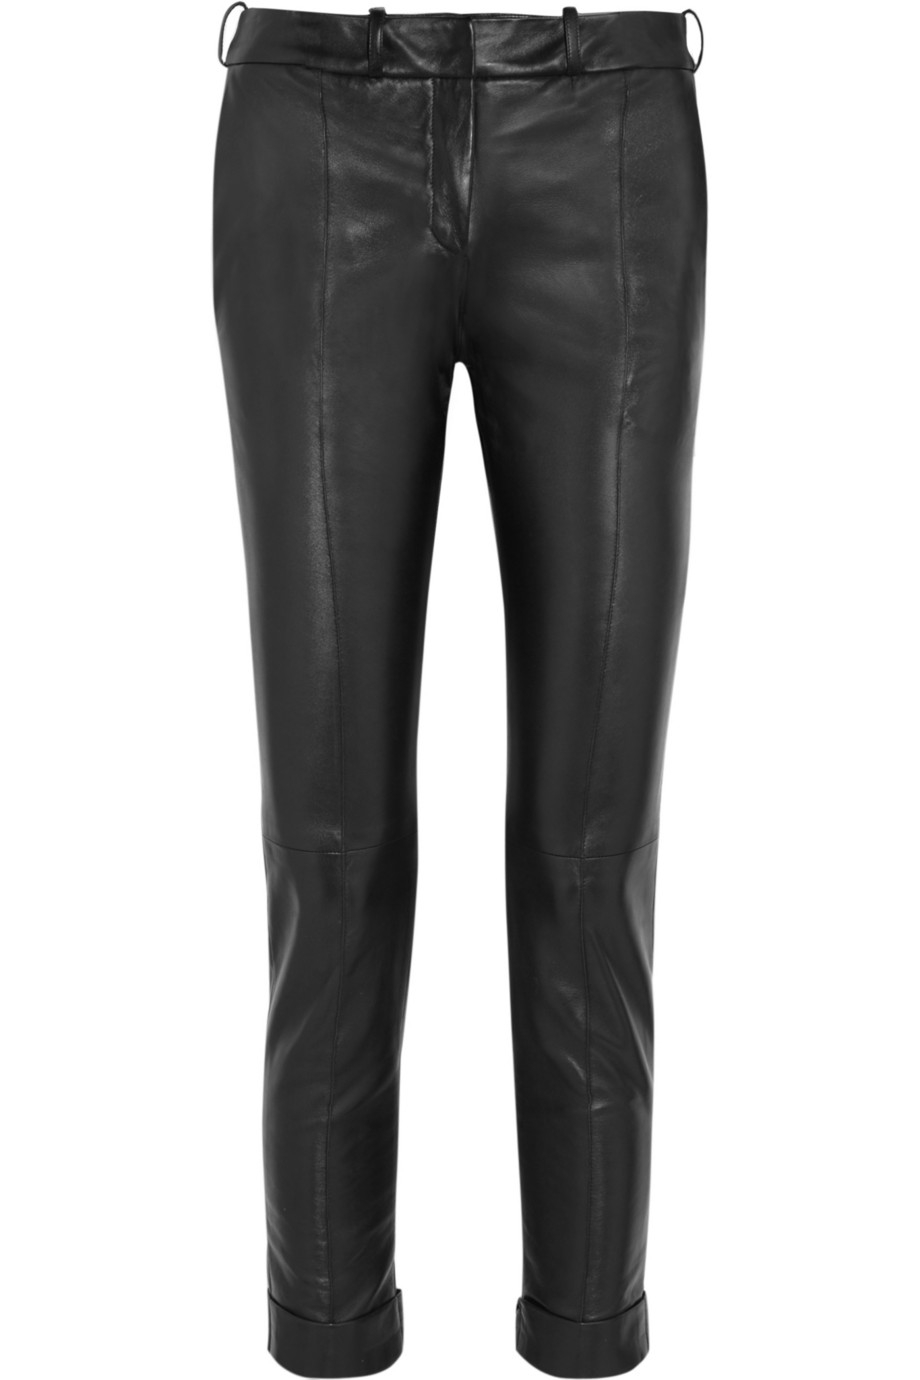 Balmain Highrise Straightleg Leather Pants in Black - Lyst